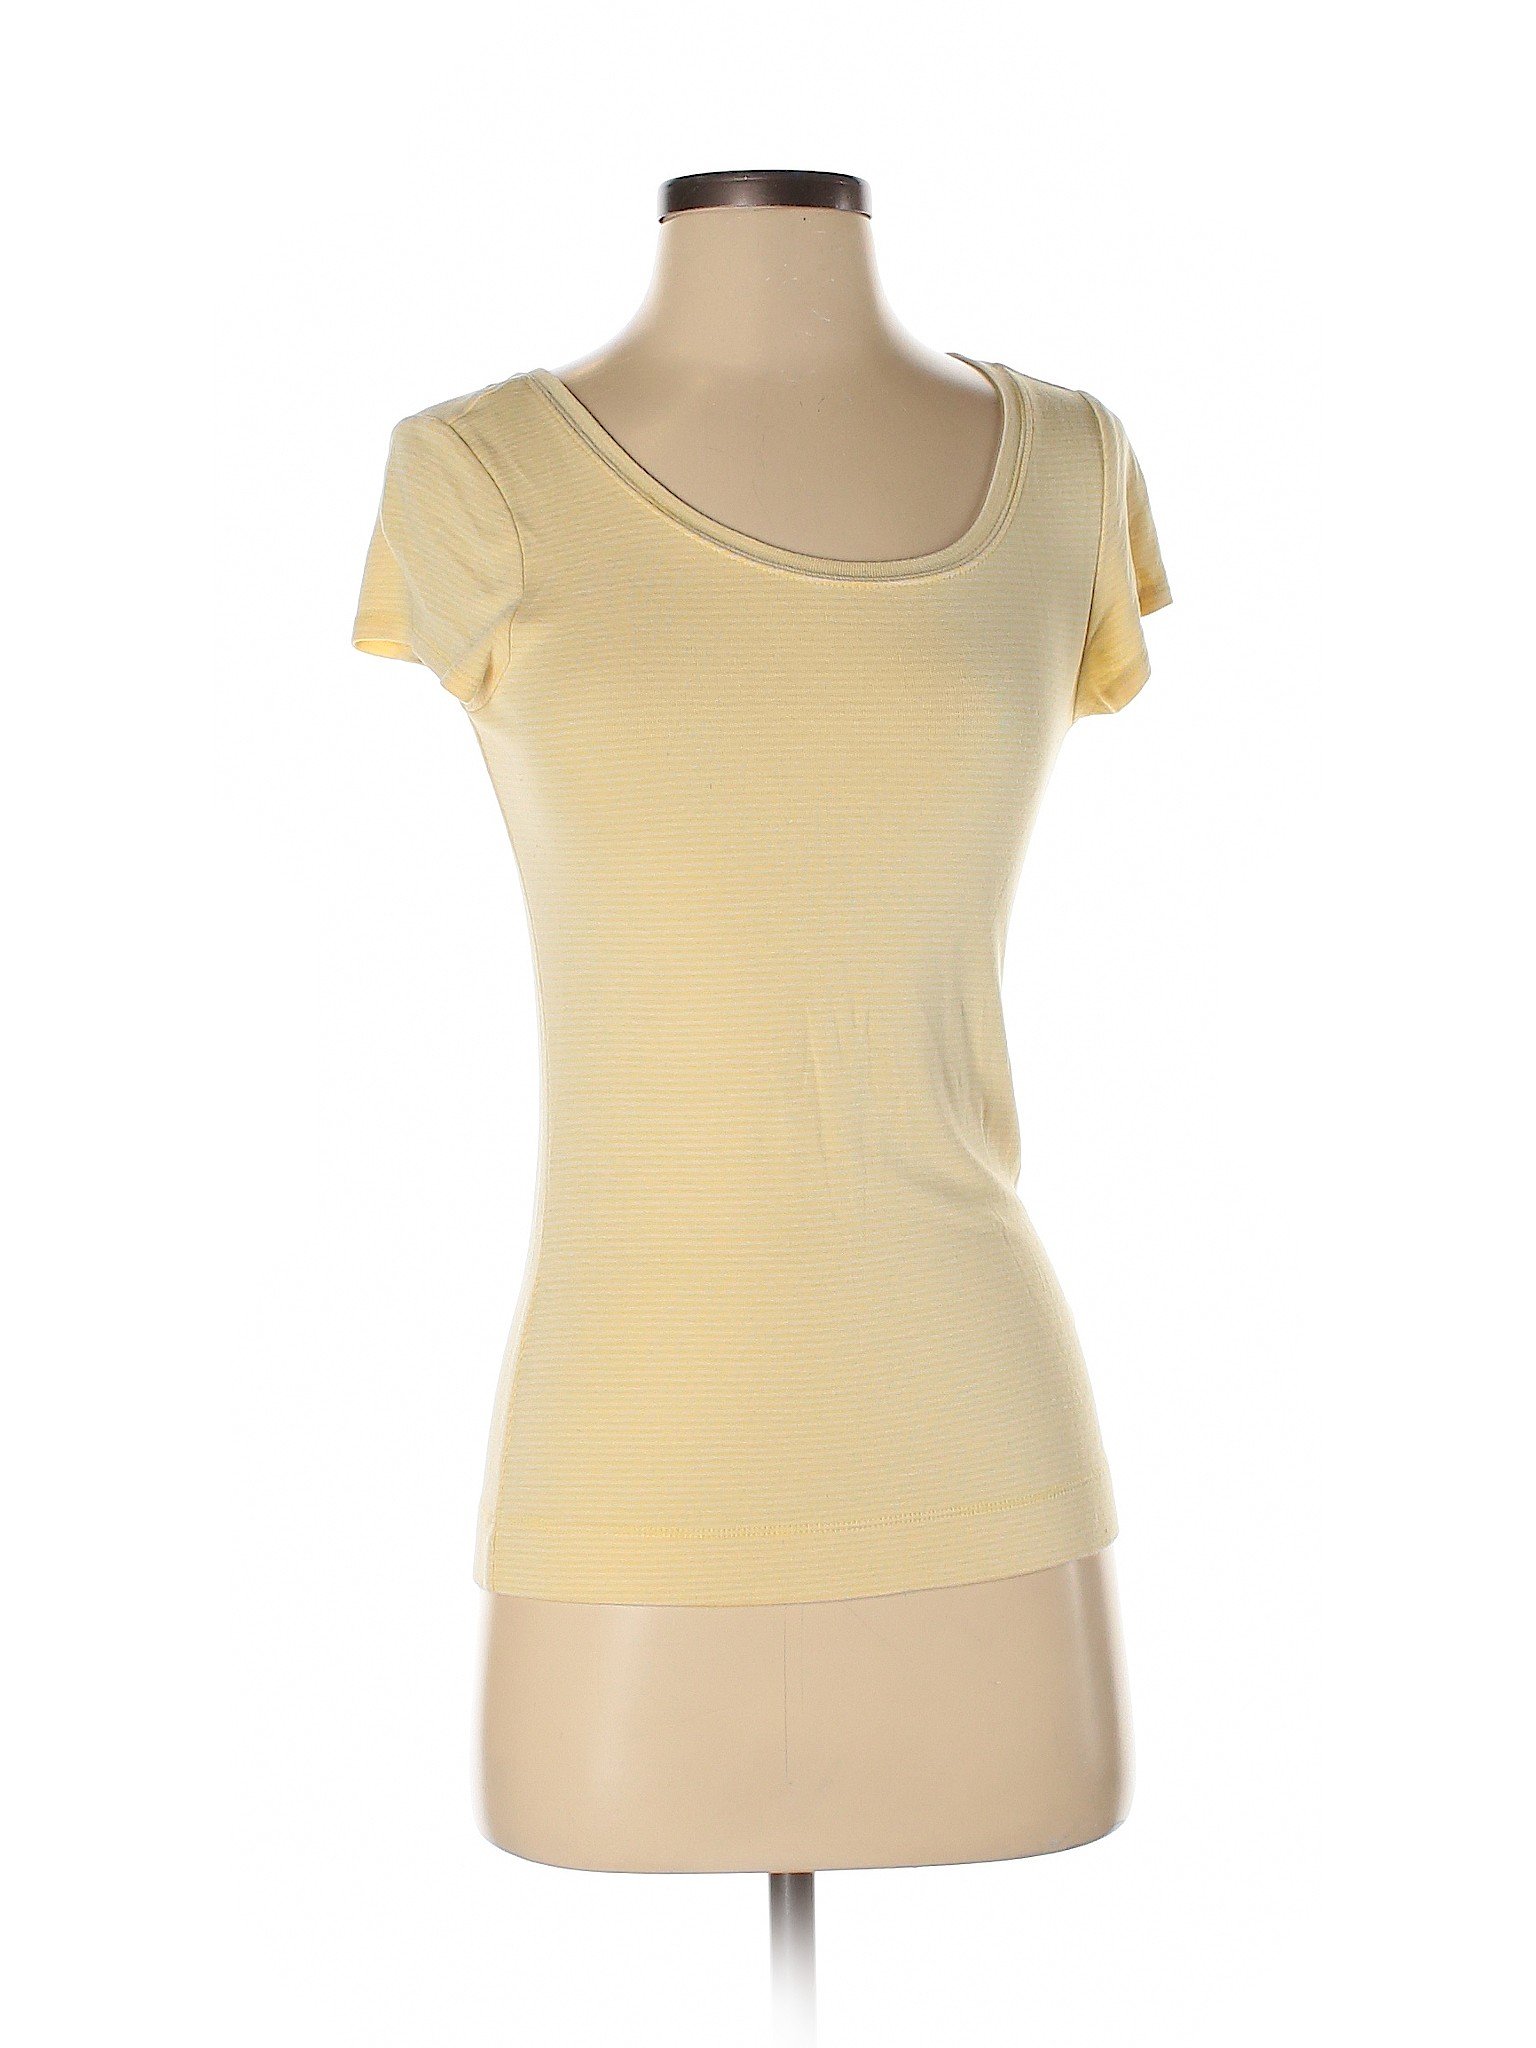 The Limited Women Brown Short Sleeve T-Shirt S | eBay